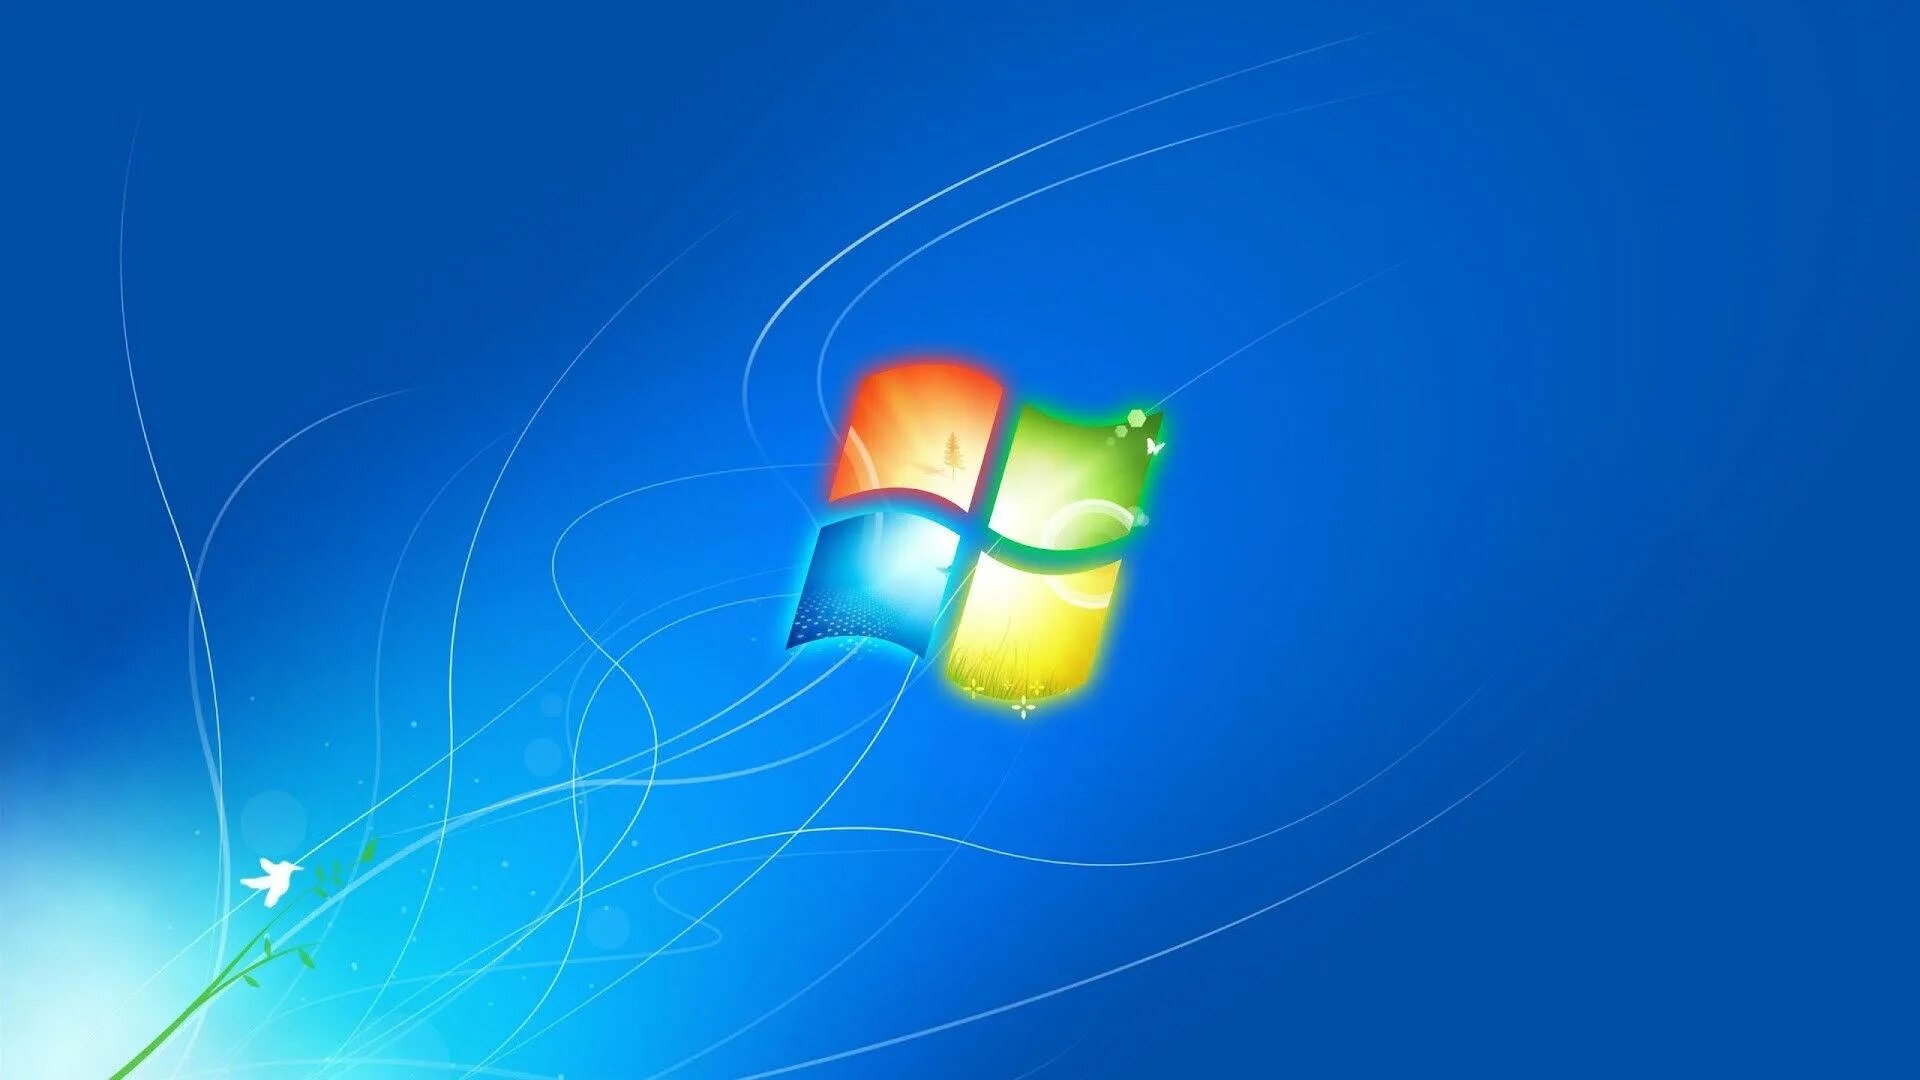 Windows 7 life. Виндовс 7. Заставка виндовс. Обои Windows 7. Логотип Windows 7.